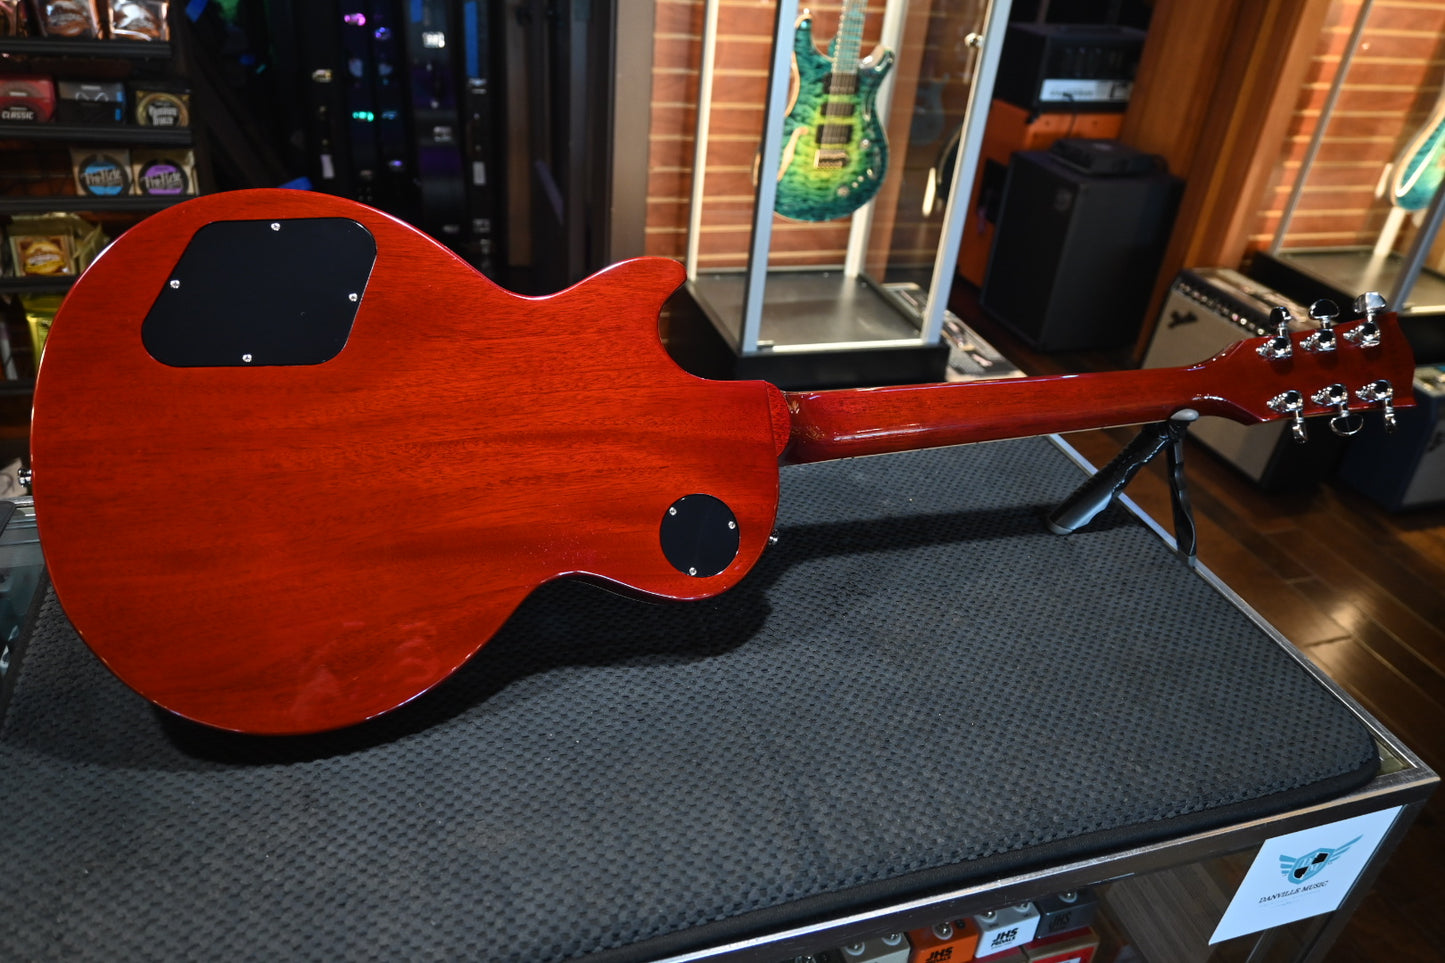 Gibson Les Paul Standard 2013 - Cherry Burst Guitar #0642 - Danville Music